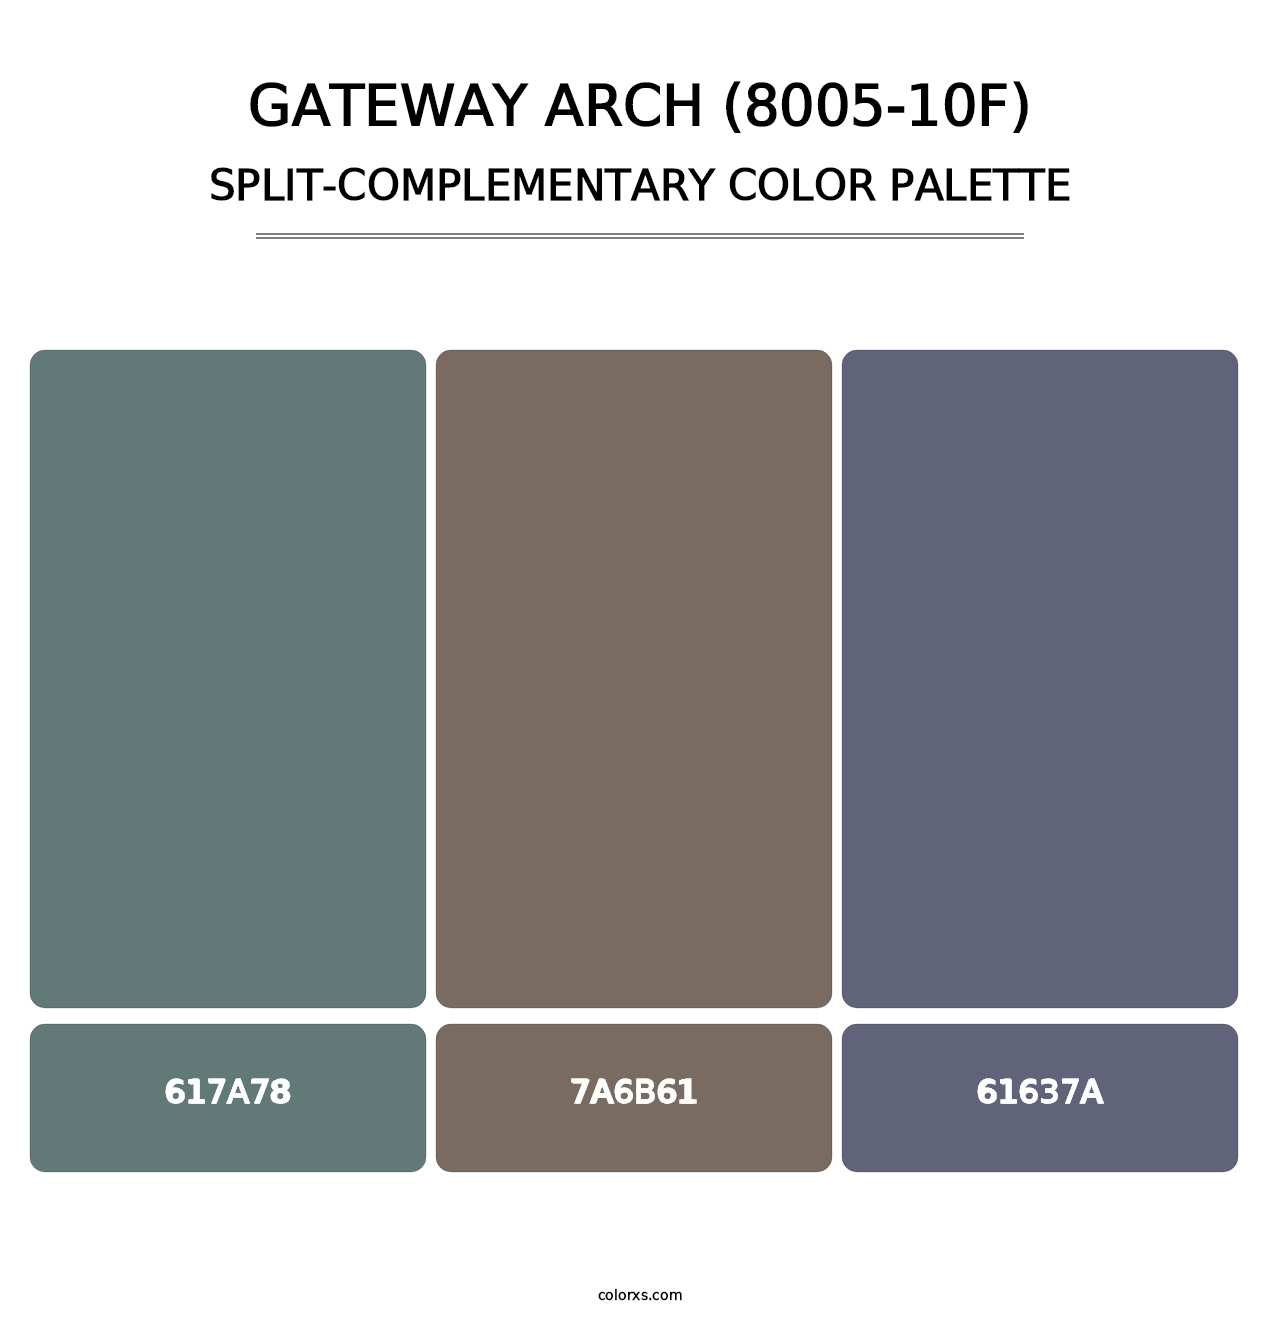 Gateway Arch (8005-10F) - Split-Complementary Color Palette